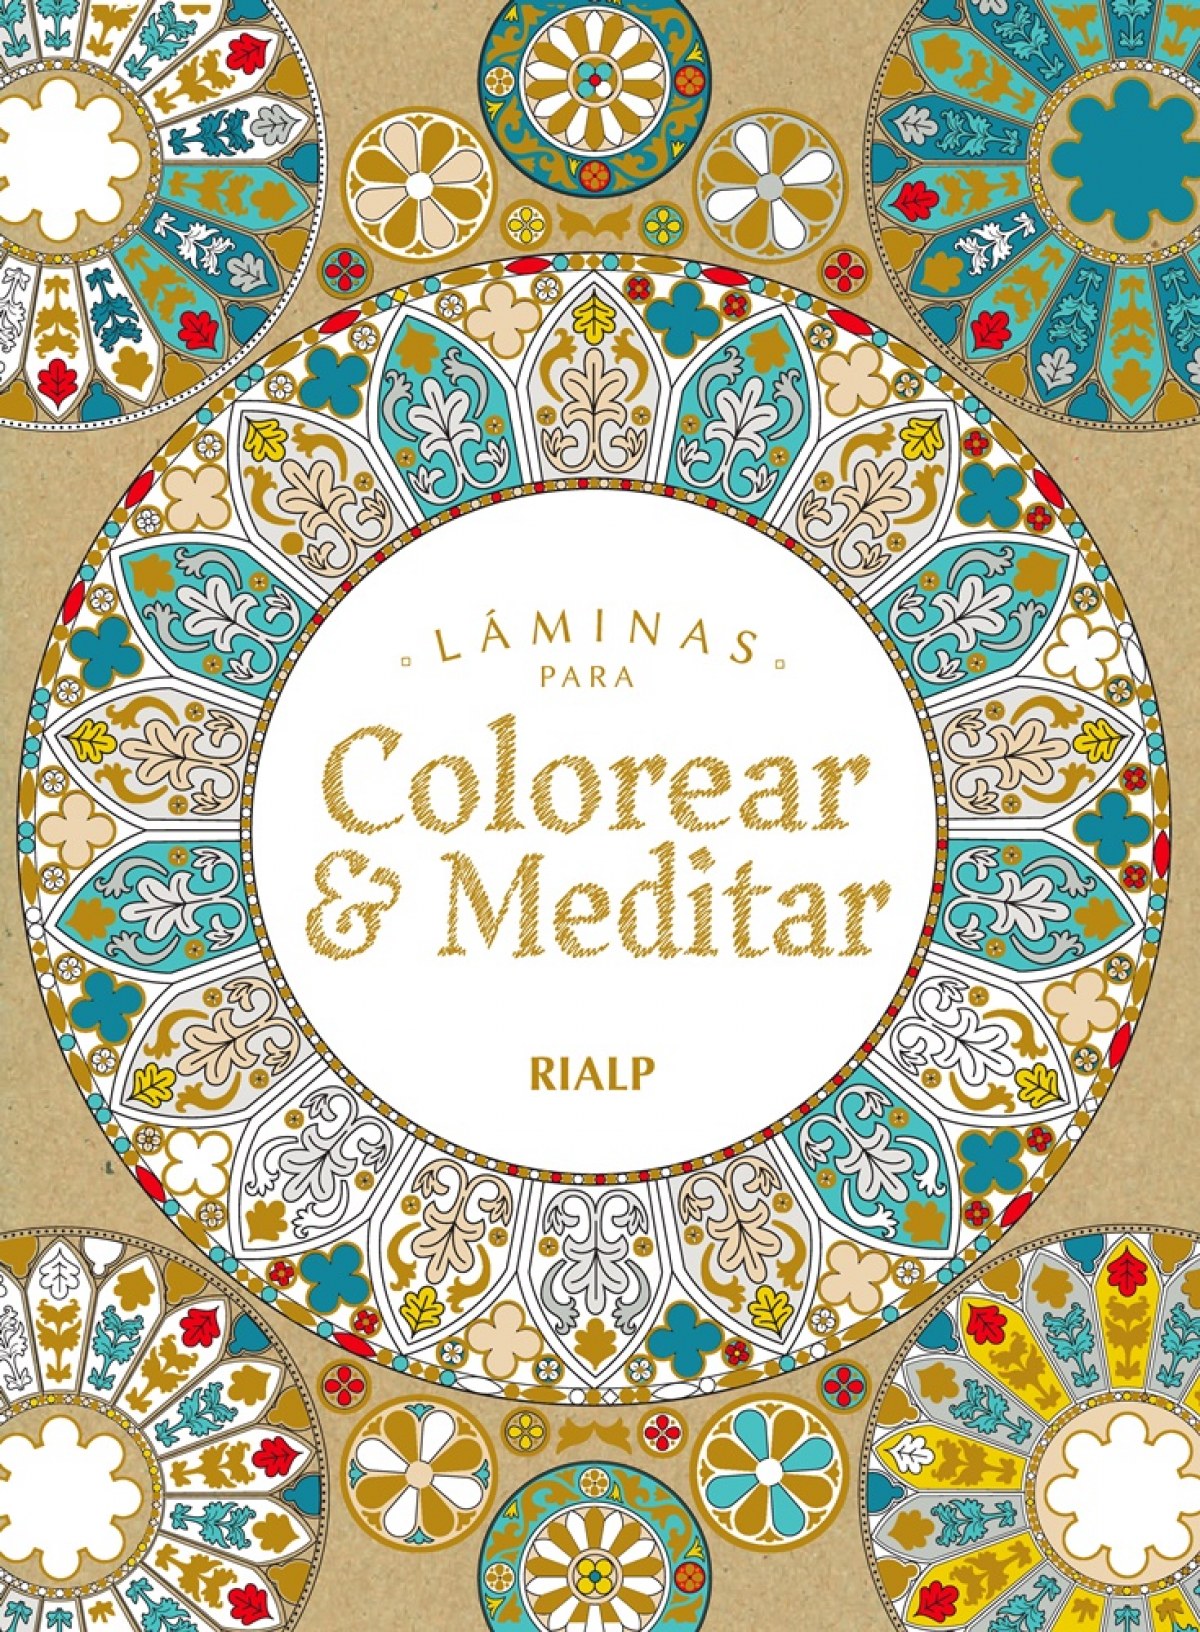 LÁminas para colorear & meditar